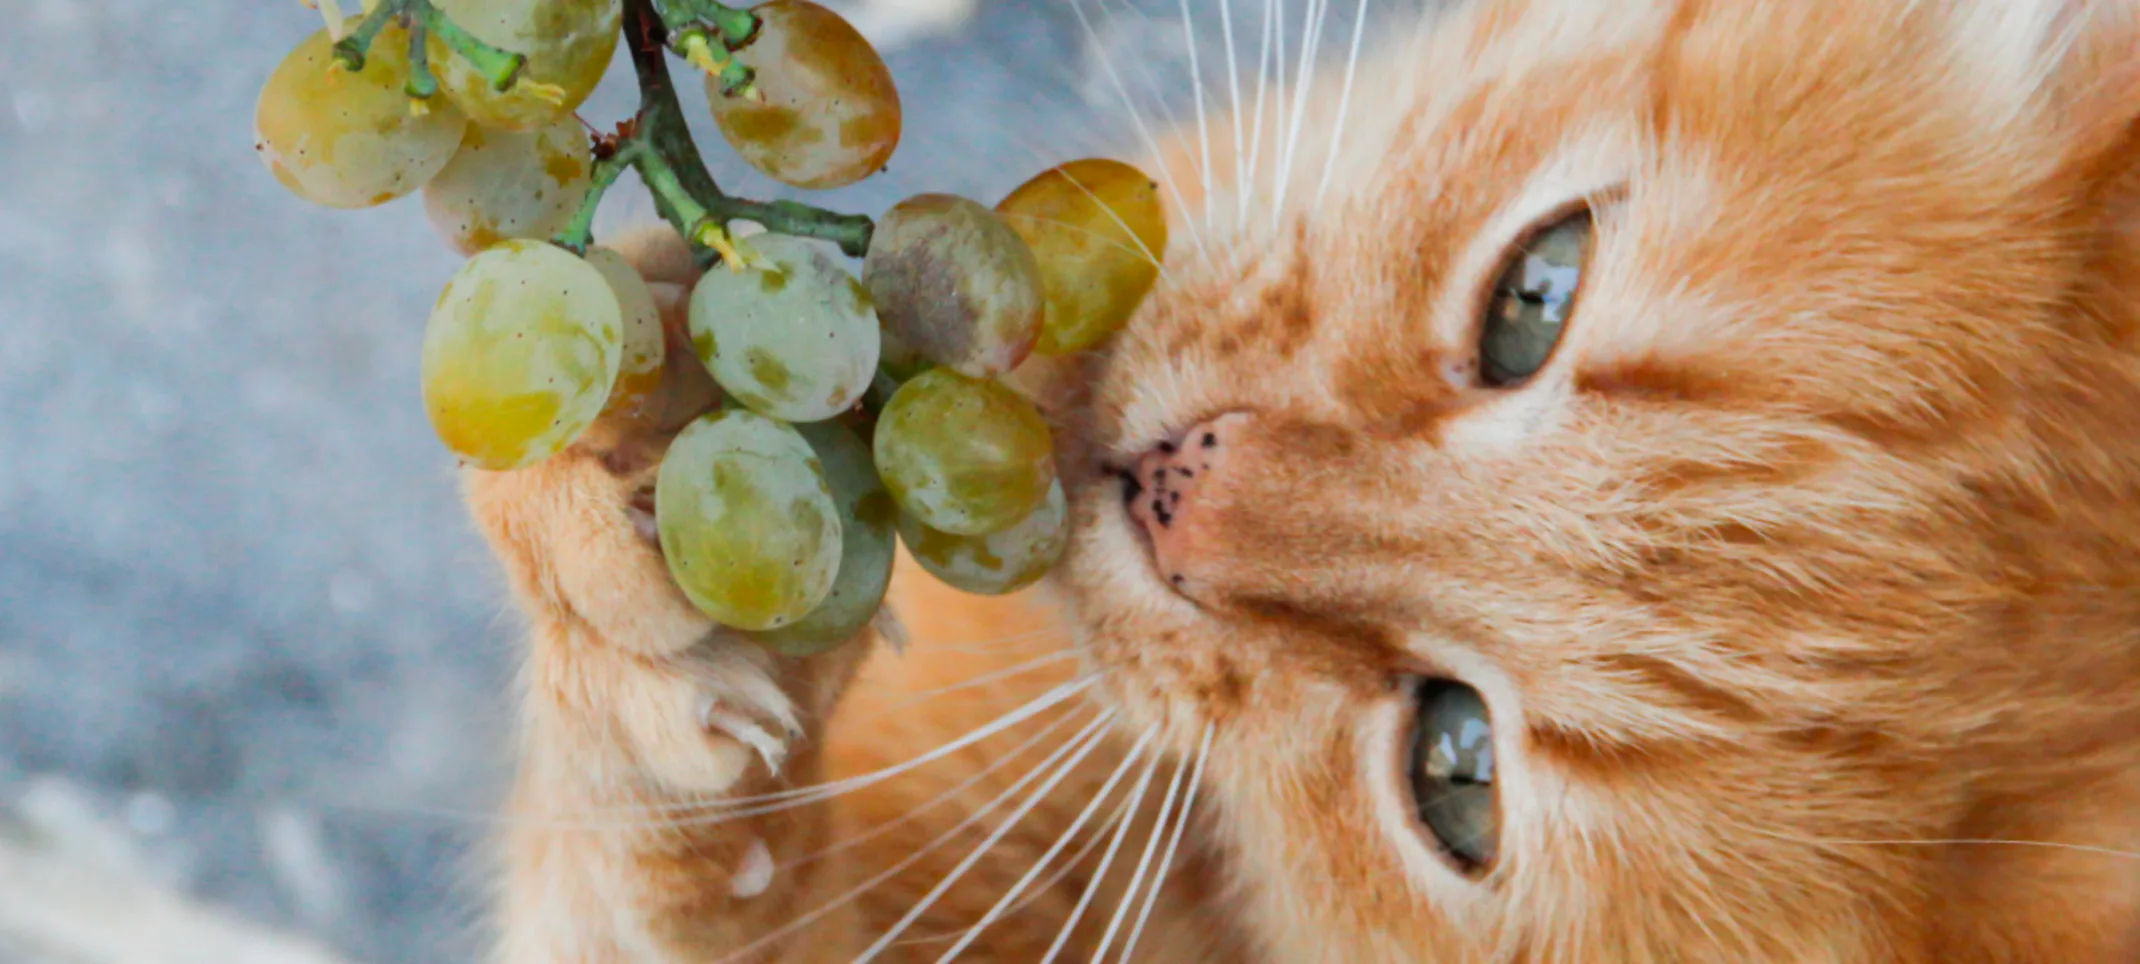 Cat eating grapes